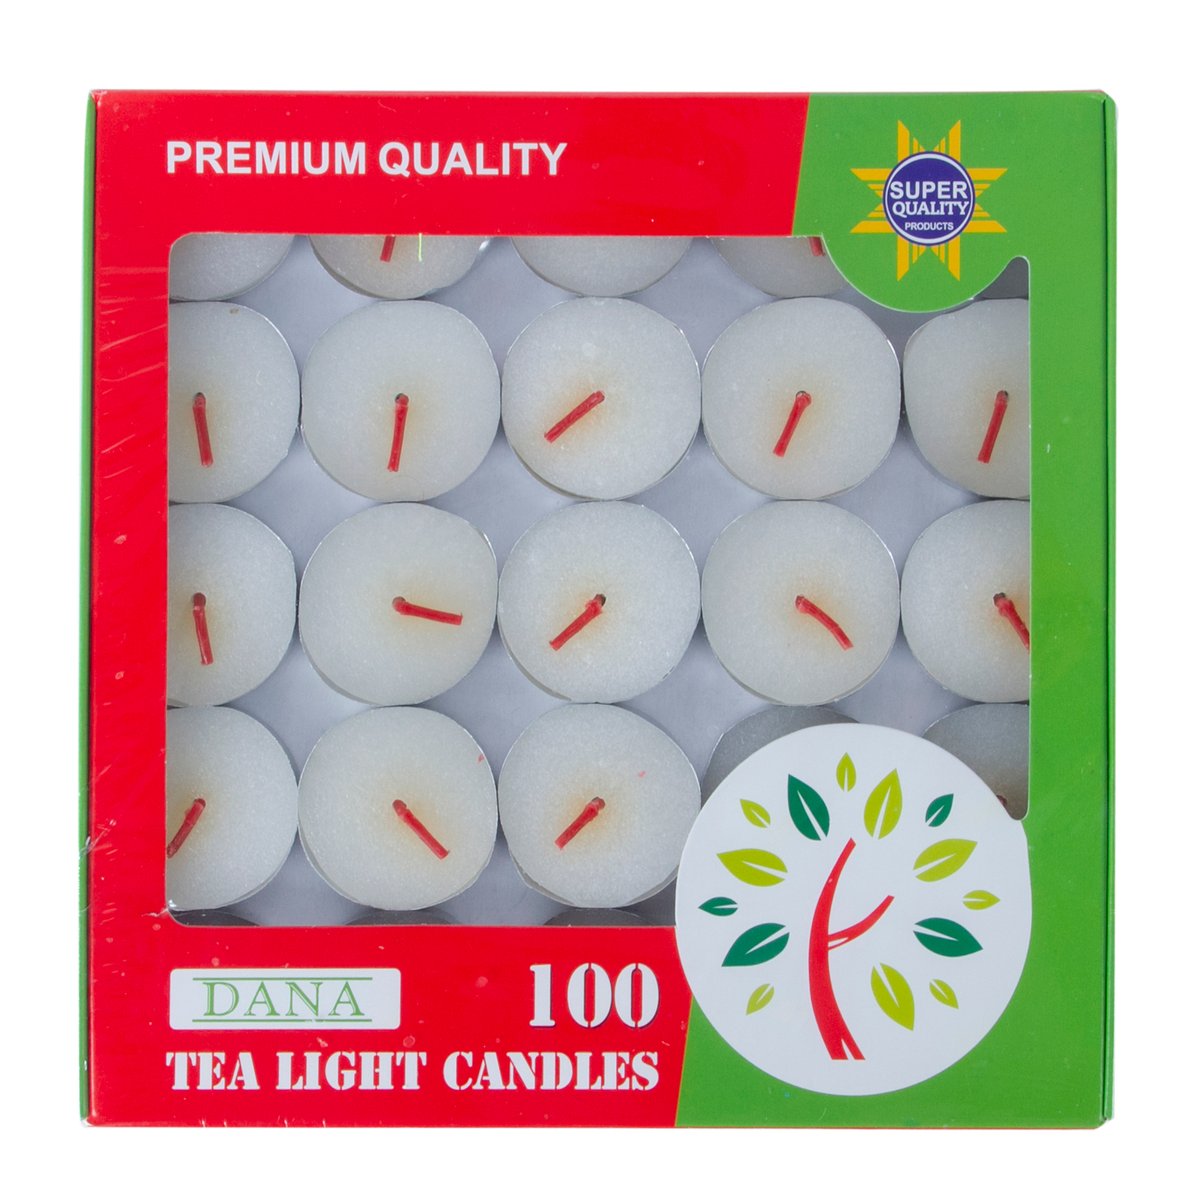 Madhoor Tea Light Candles 100's Assorted